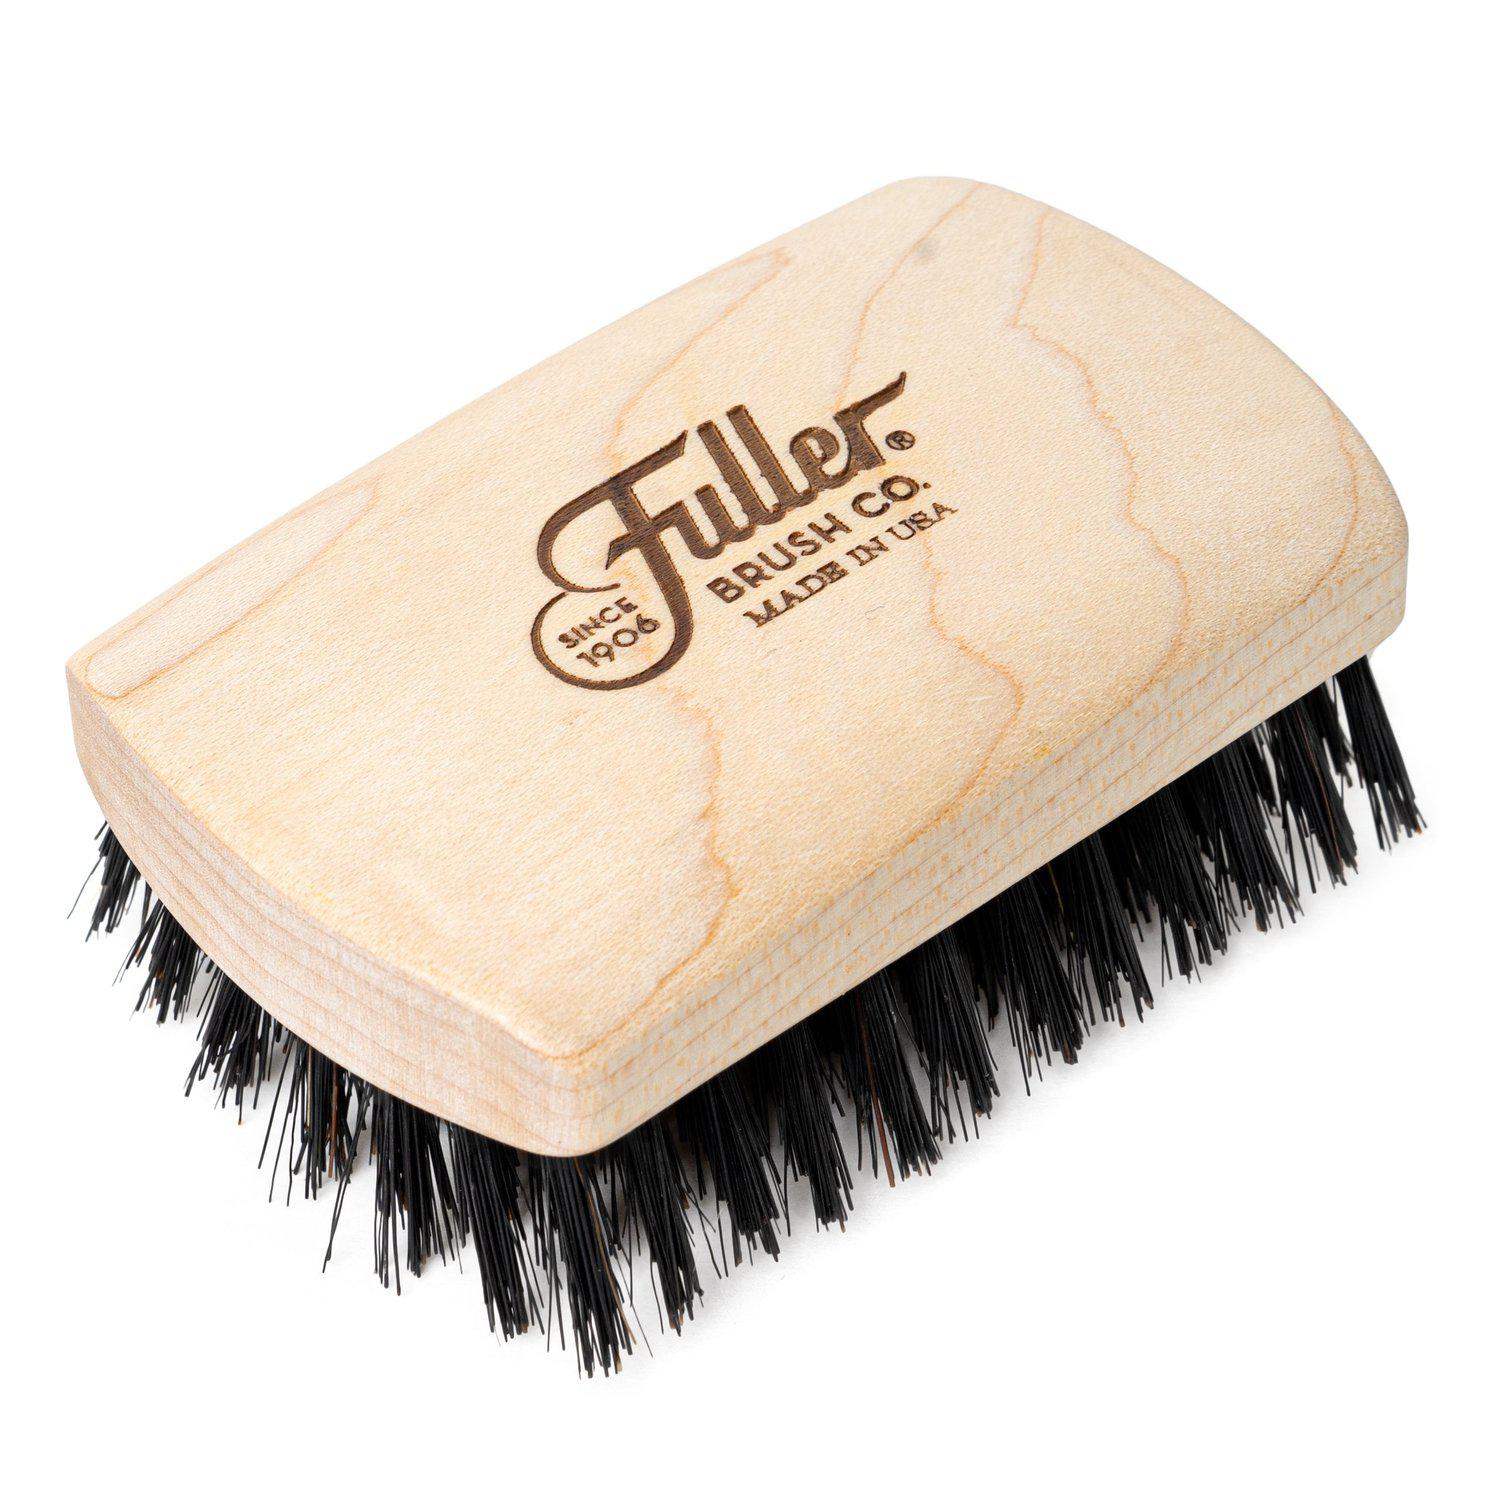 Hair & Beard Brush w/ Maple block and Natural Boars Hair Bristles - Pocket Size-Hair Brushes-Fuller Brush Company